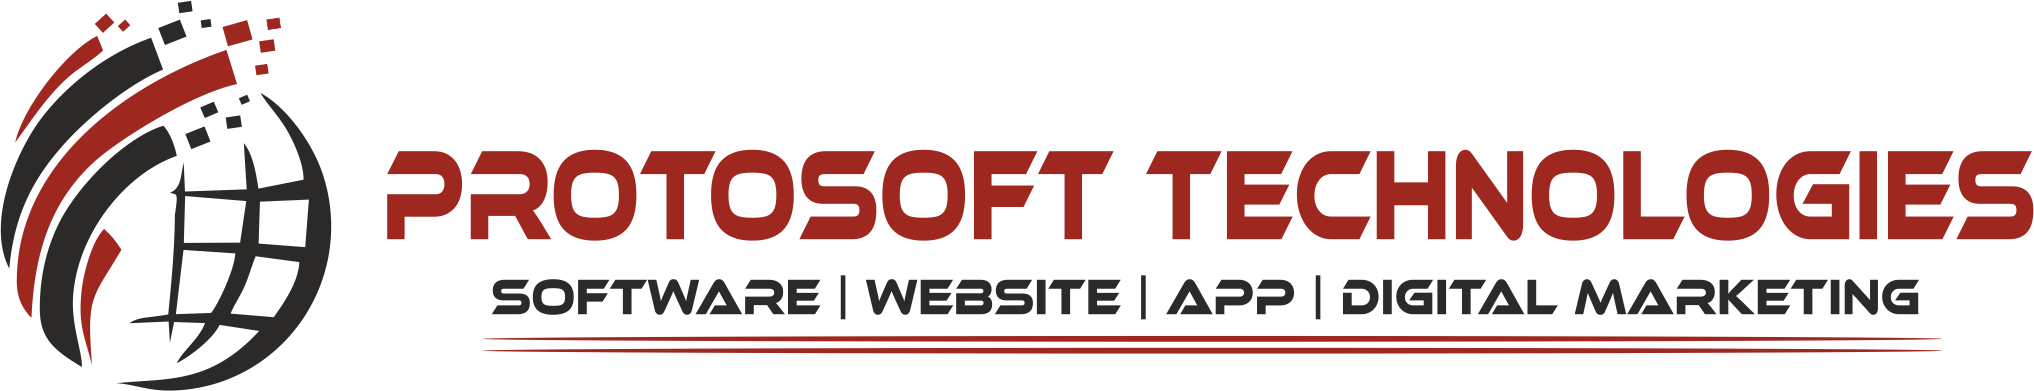 Protosoft Technologies : Software, Website, App, Digital Marketing